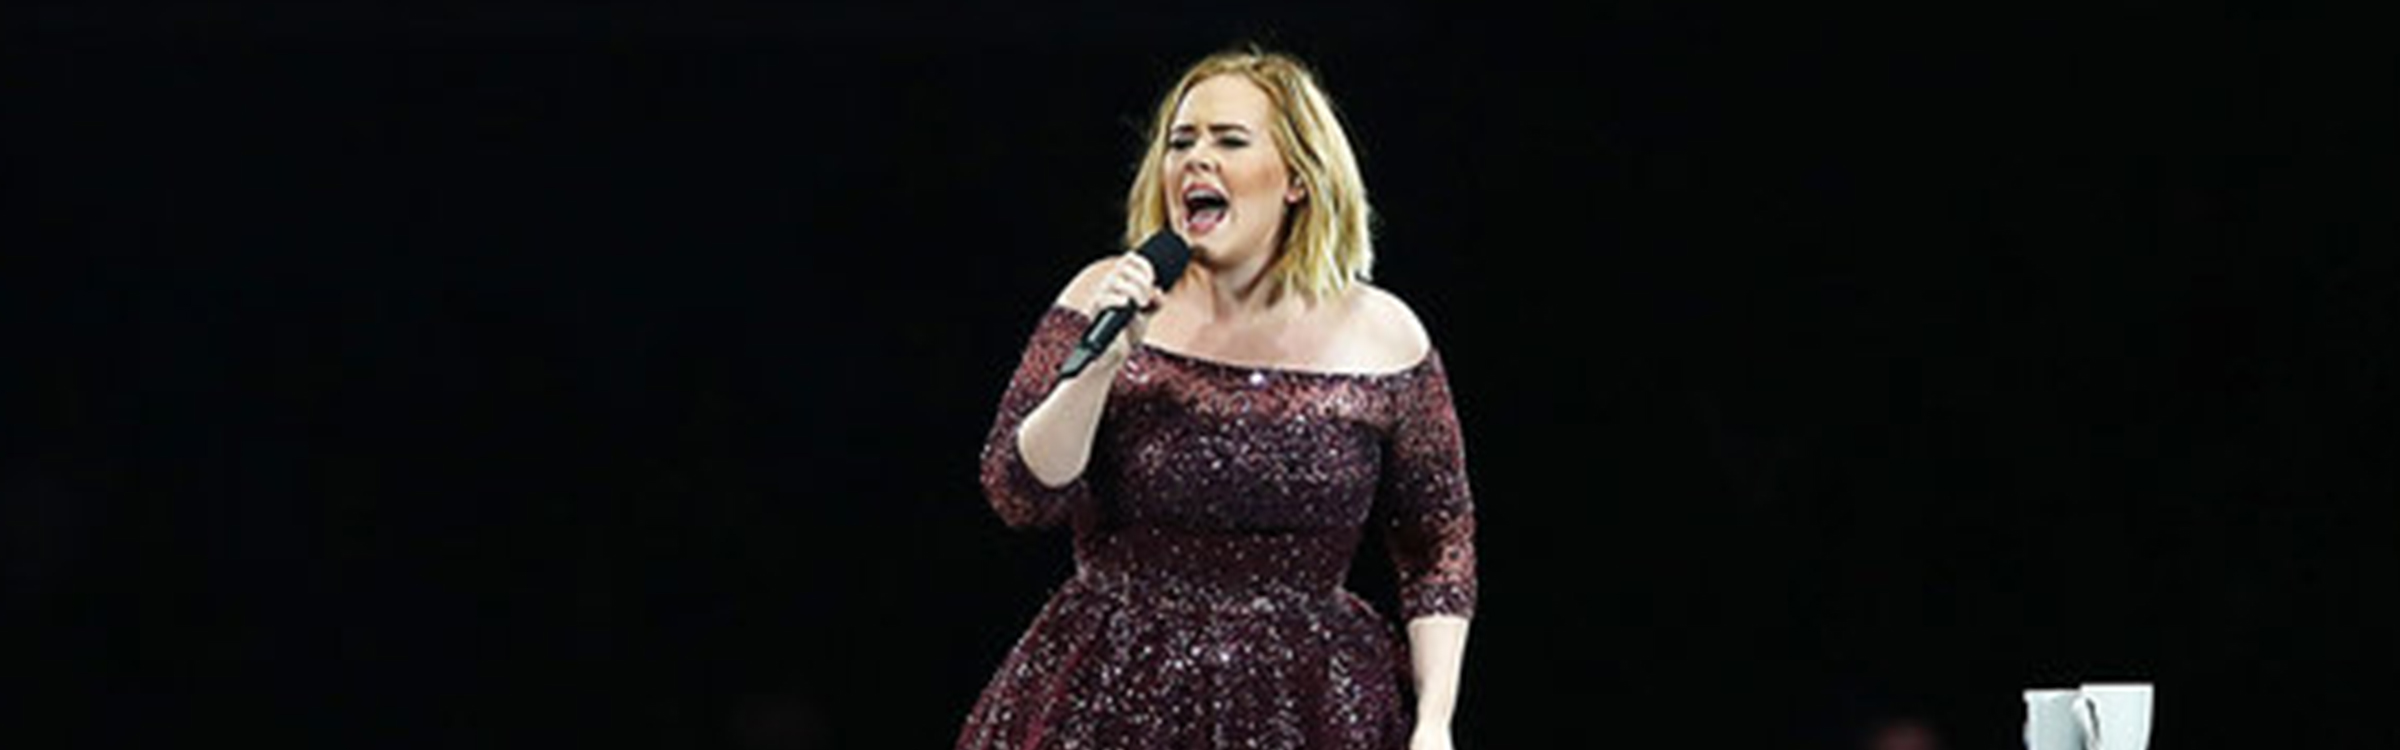 Adele stand up header